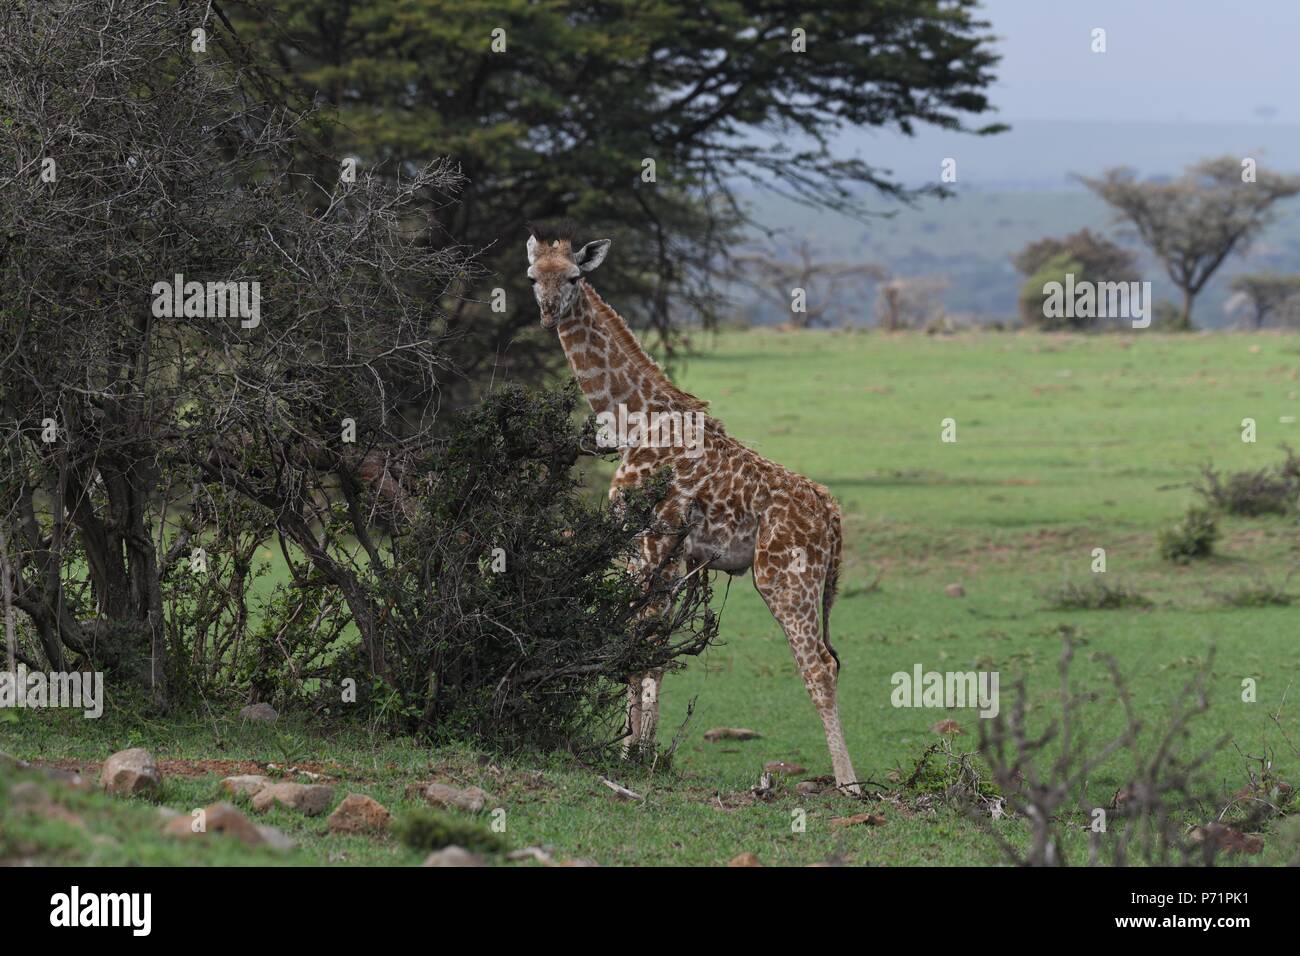 Young /baby only 1 day old. The Maasai giraffe (Giraffa camelopardalis tippelskirchii). Picture taken in the valley at Mahali Mzuri, Maasai Mara. Stock Photo